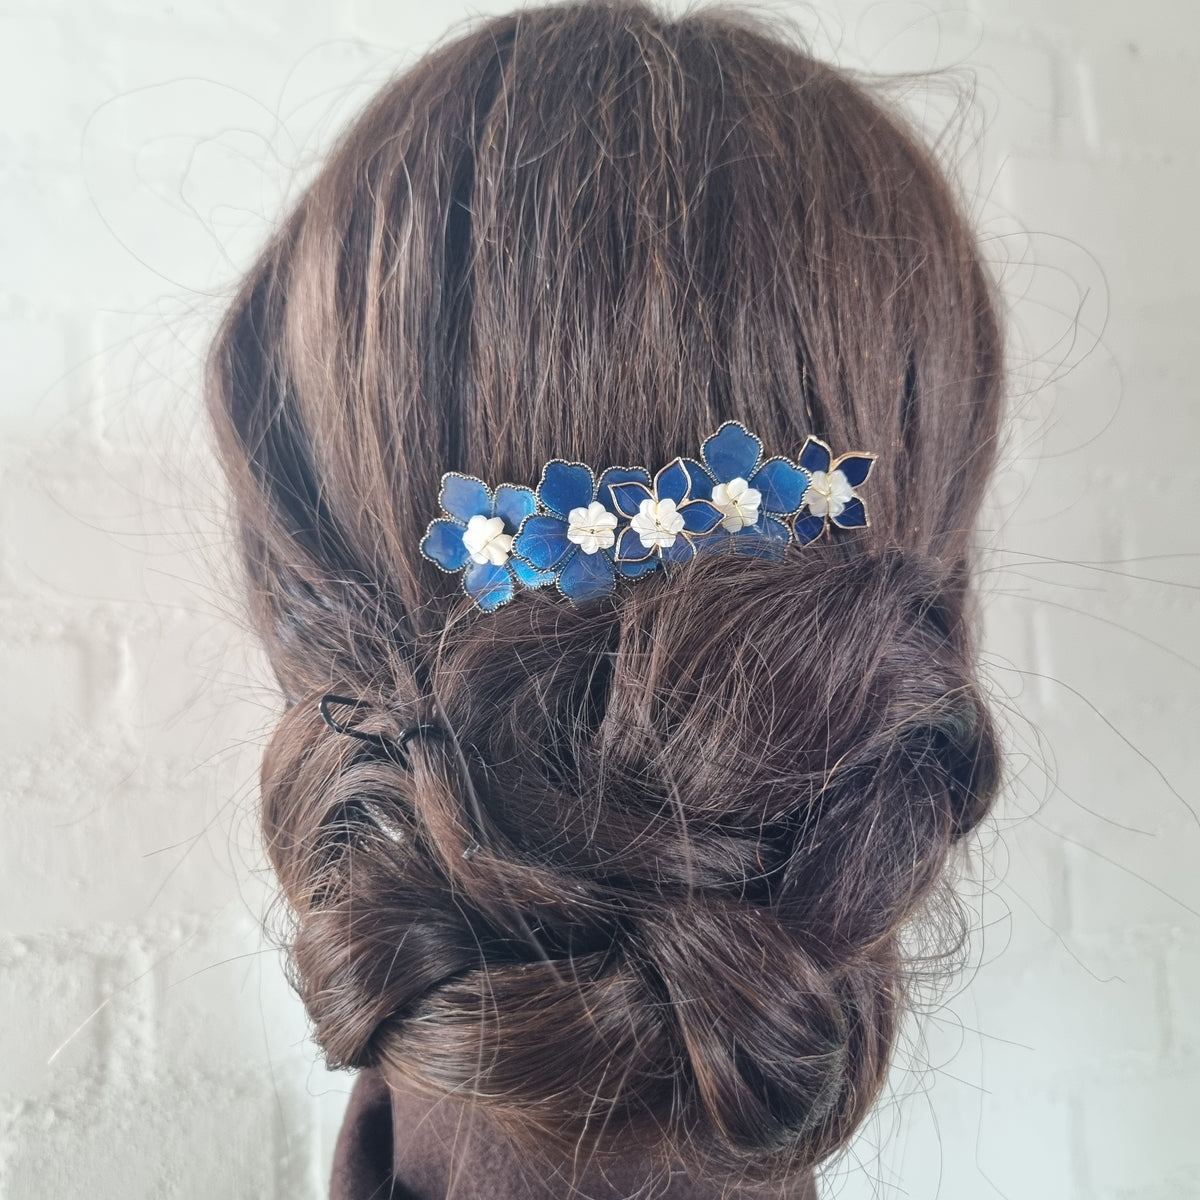 Hårkam med blå emaljeblomster - Hårpynt med blomster og perler til bryllup, konfirmation og fest